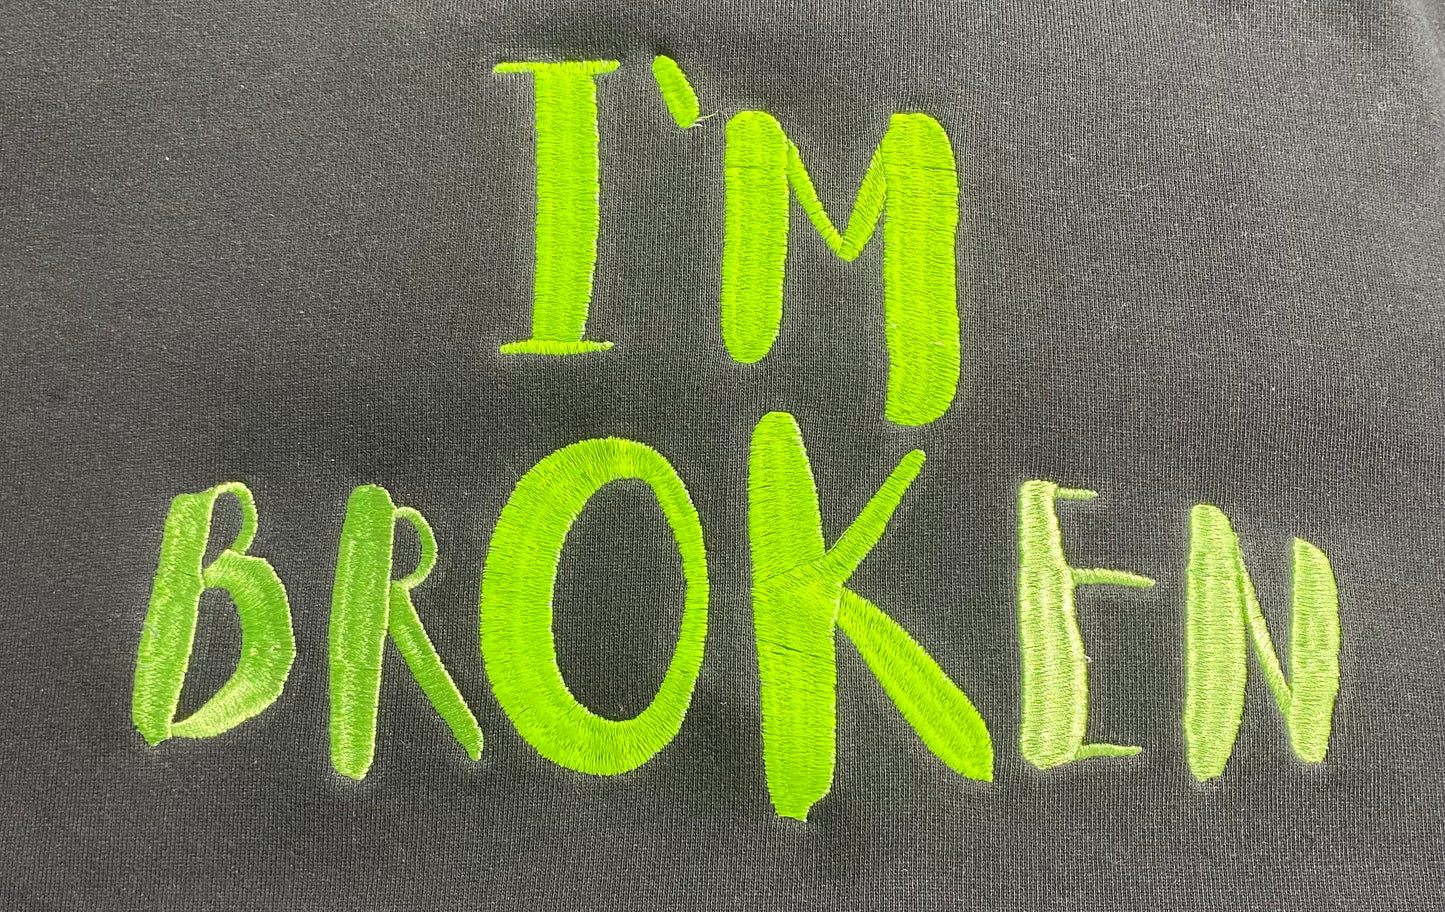 I’m Ok/ I’m Broken